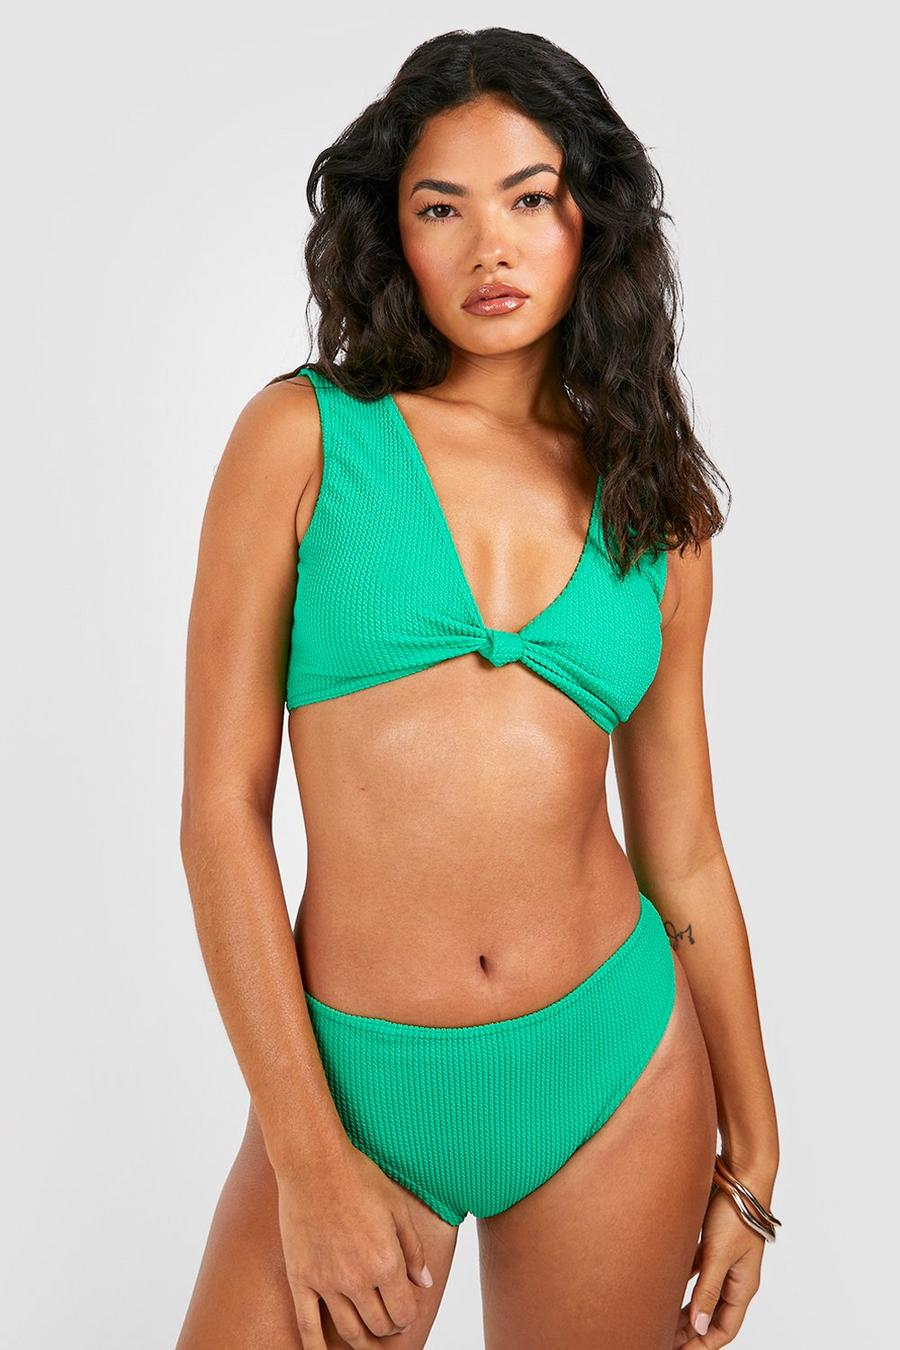 Green Gekreukelde Opgeknoopte Bikini Set